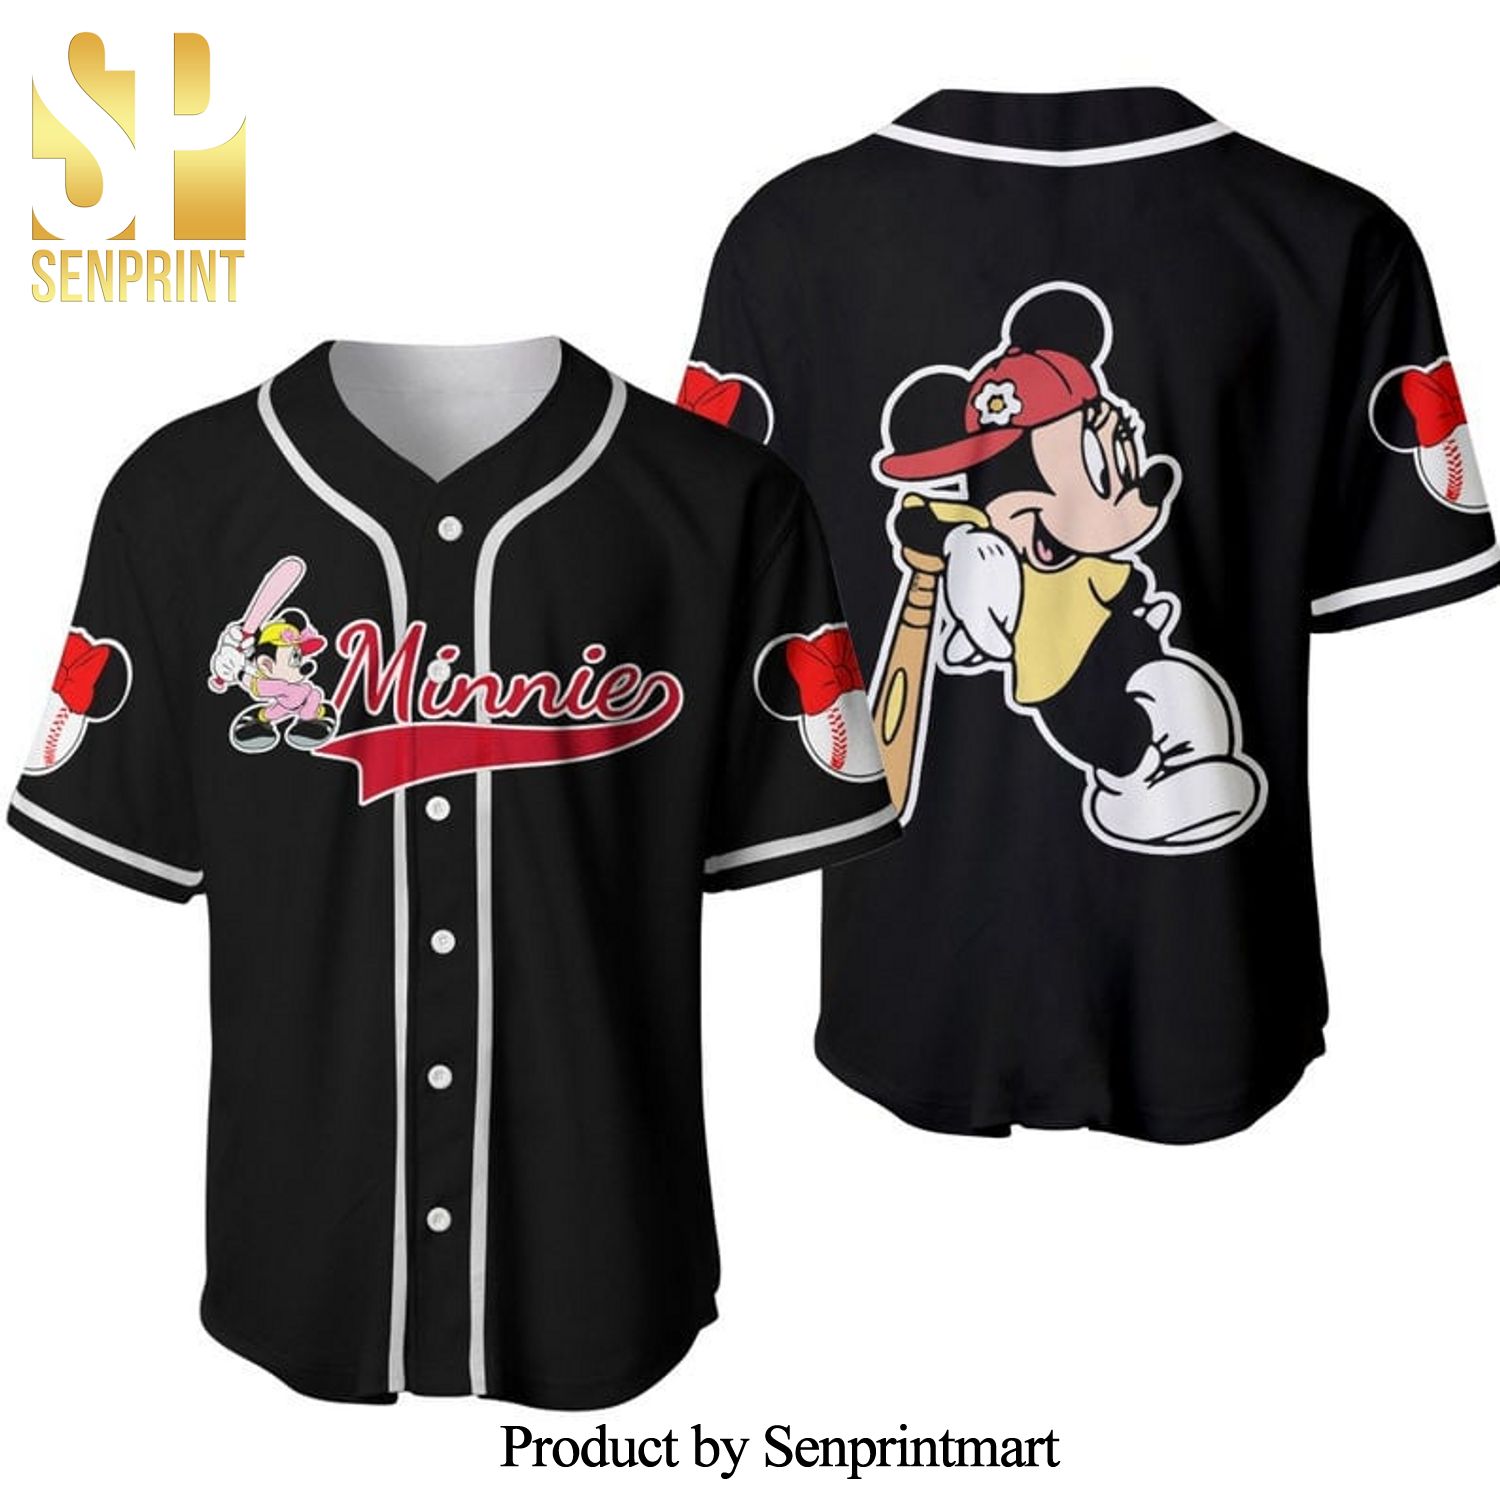 Minnie Mouse Disney Cartoon Graphics All Over Print Unisex Baseball Jersey – Black